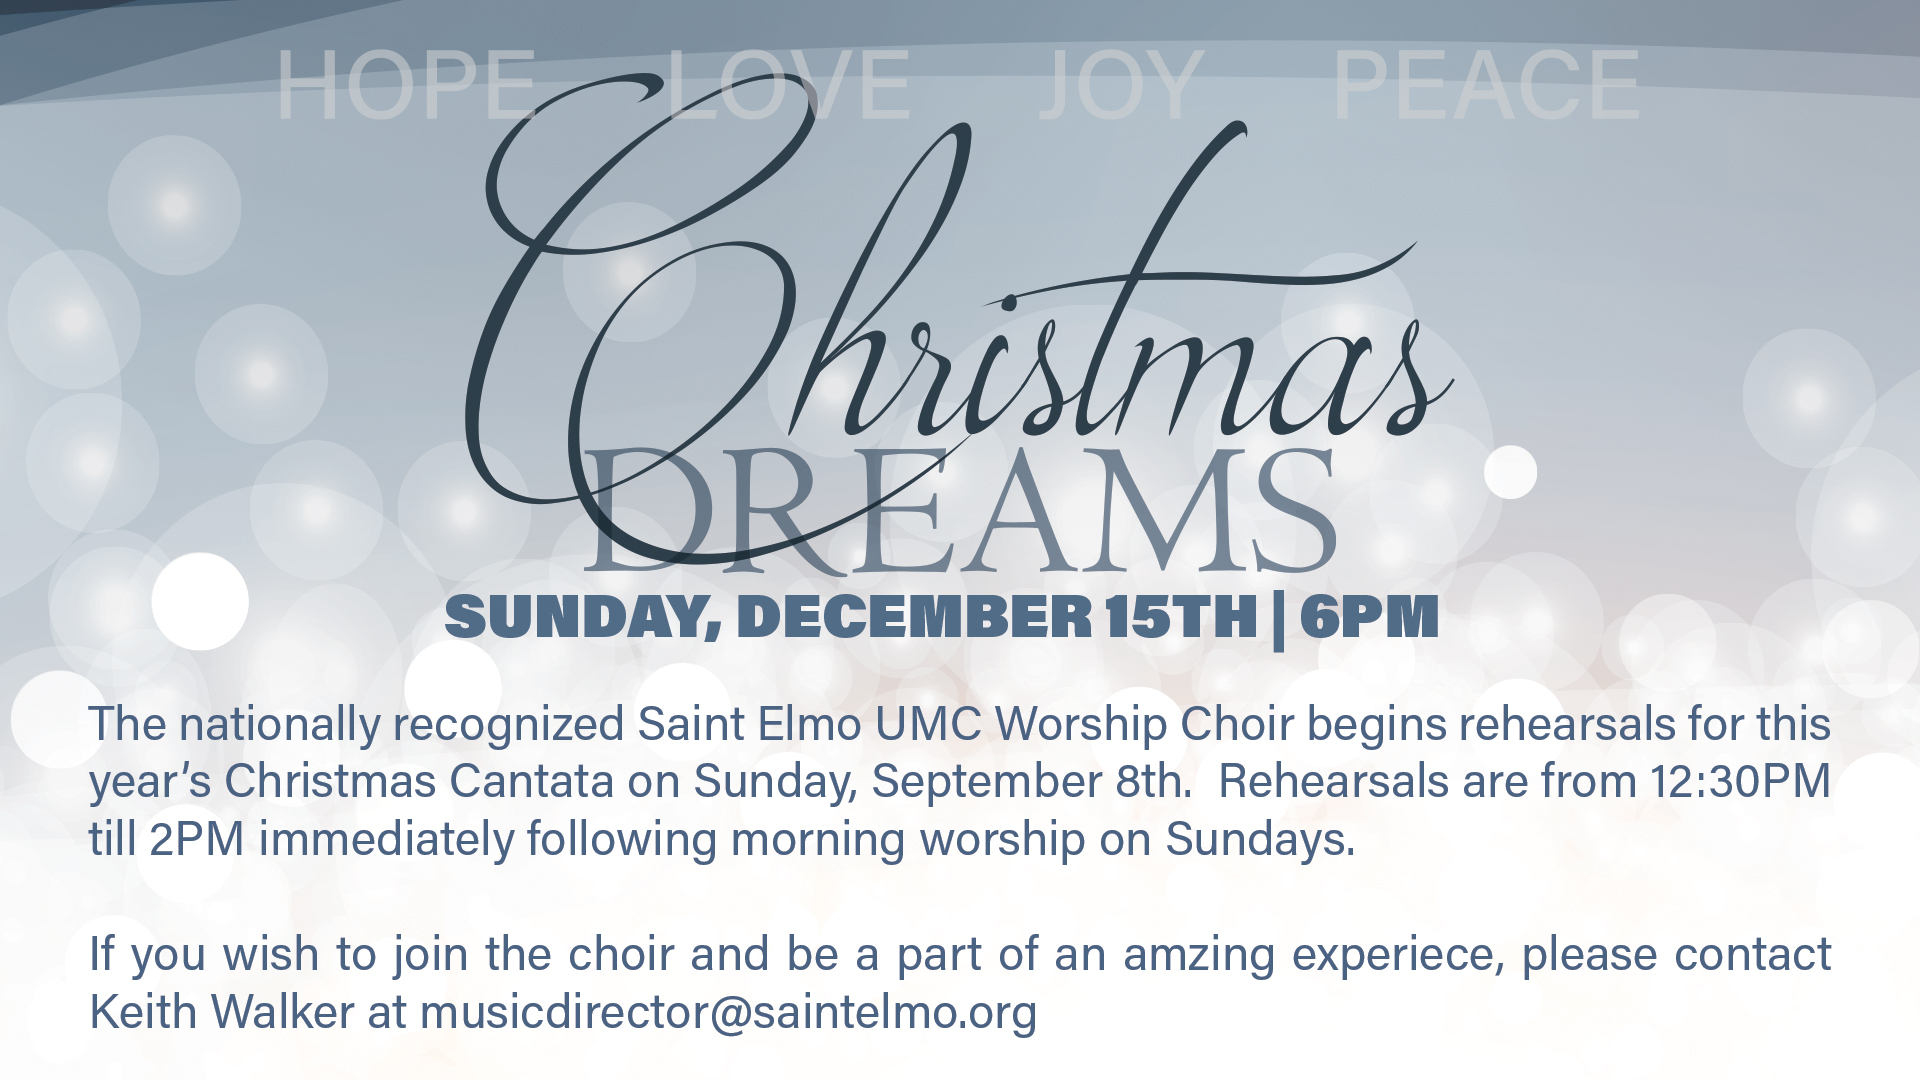 St. Elmo – United Methodist Church